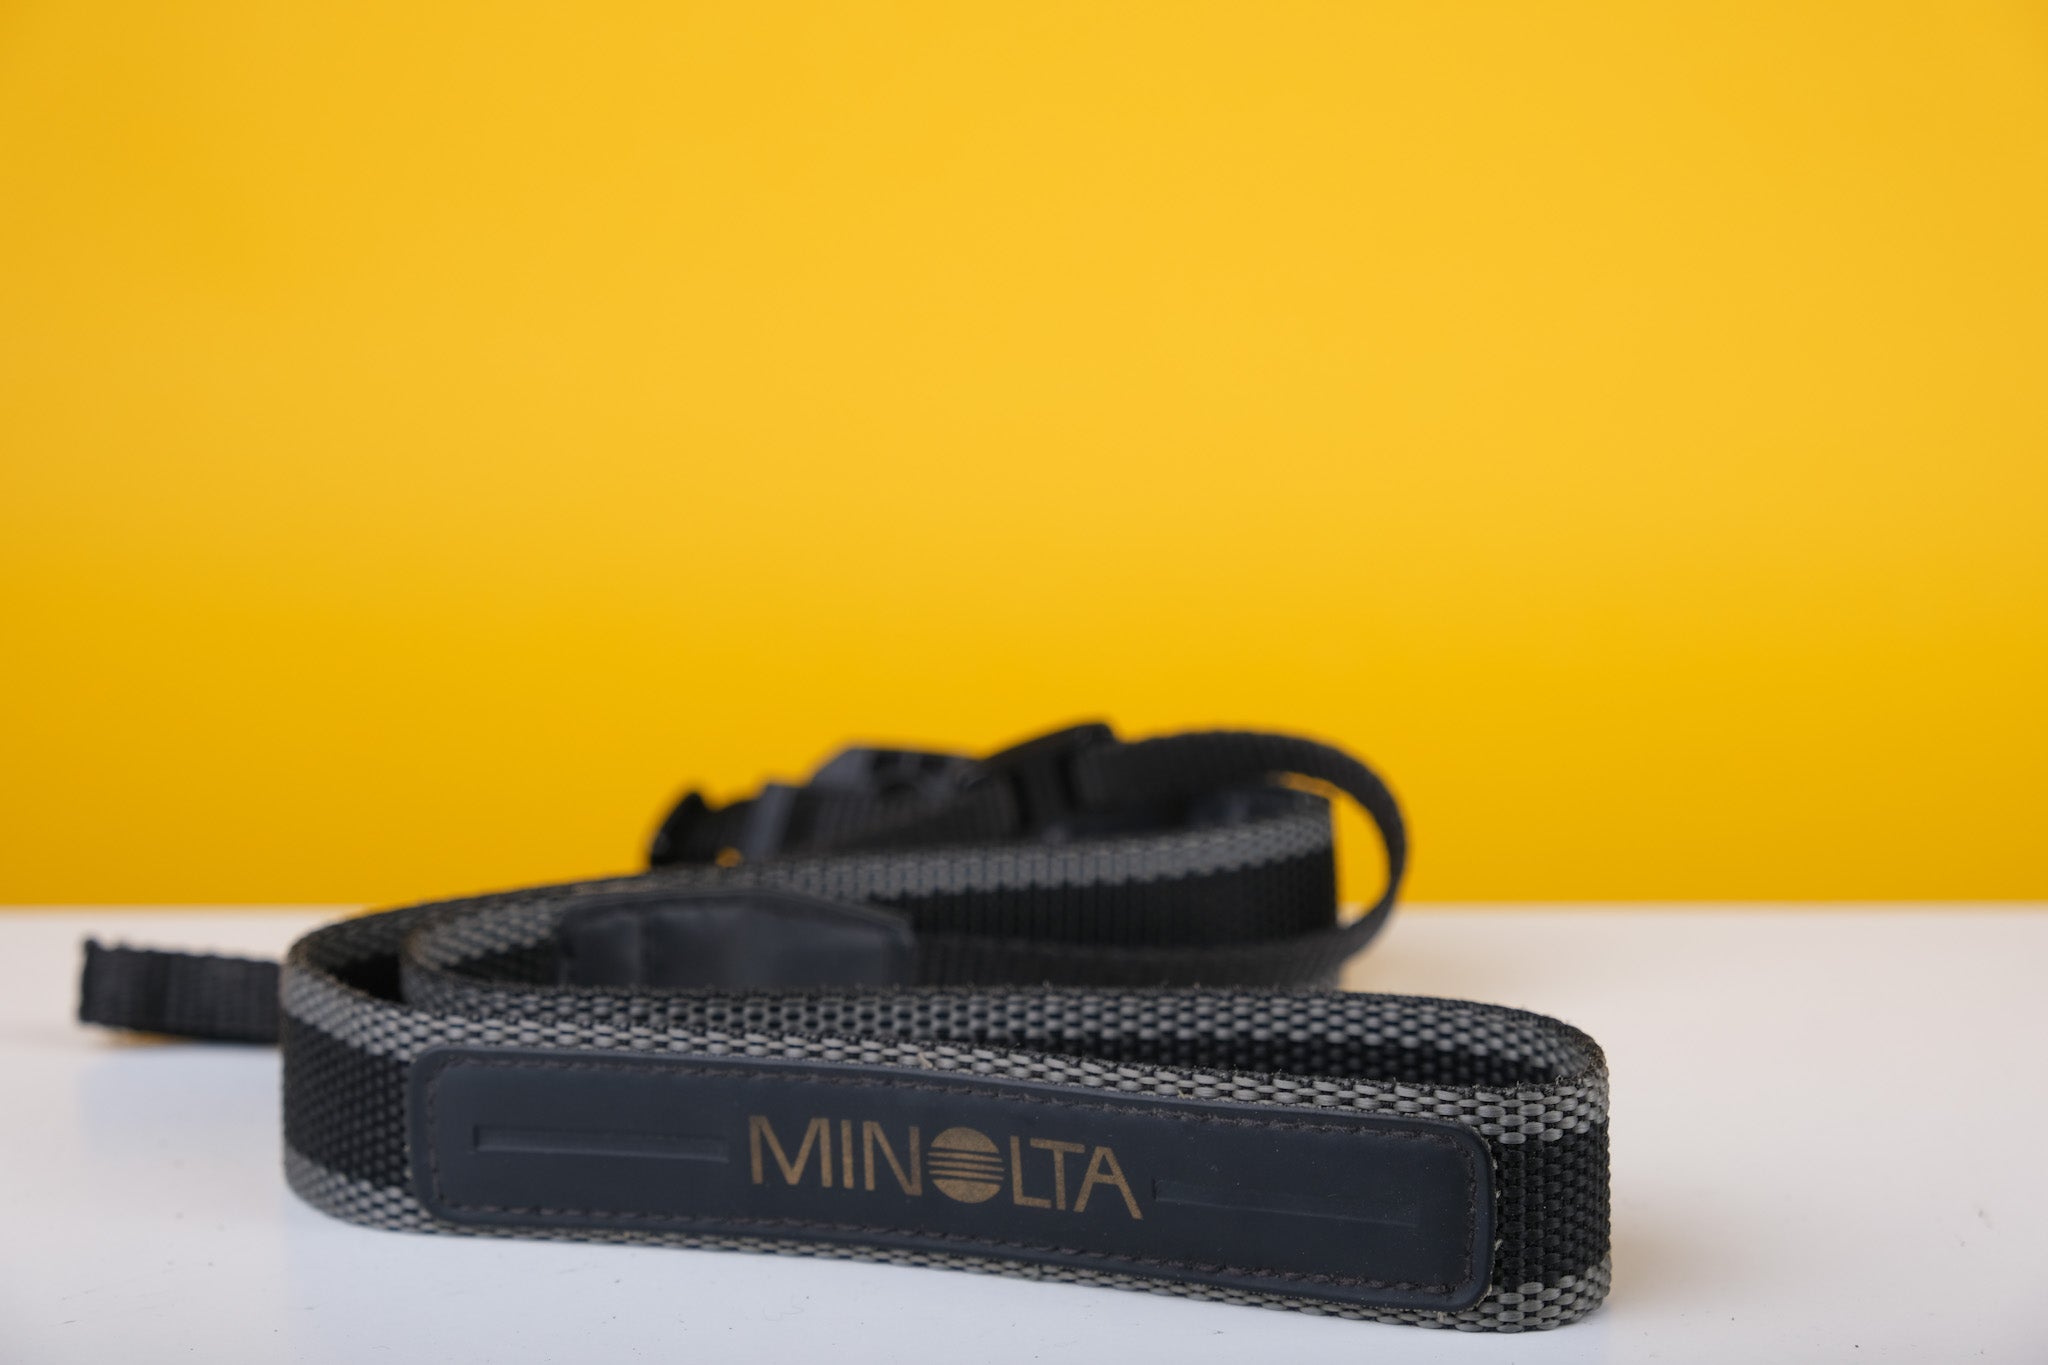 Minolta Camera Strap